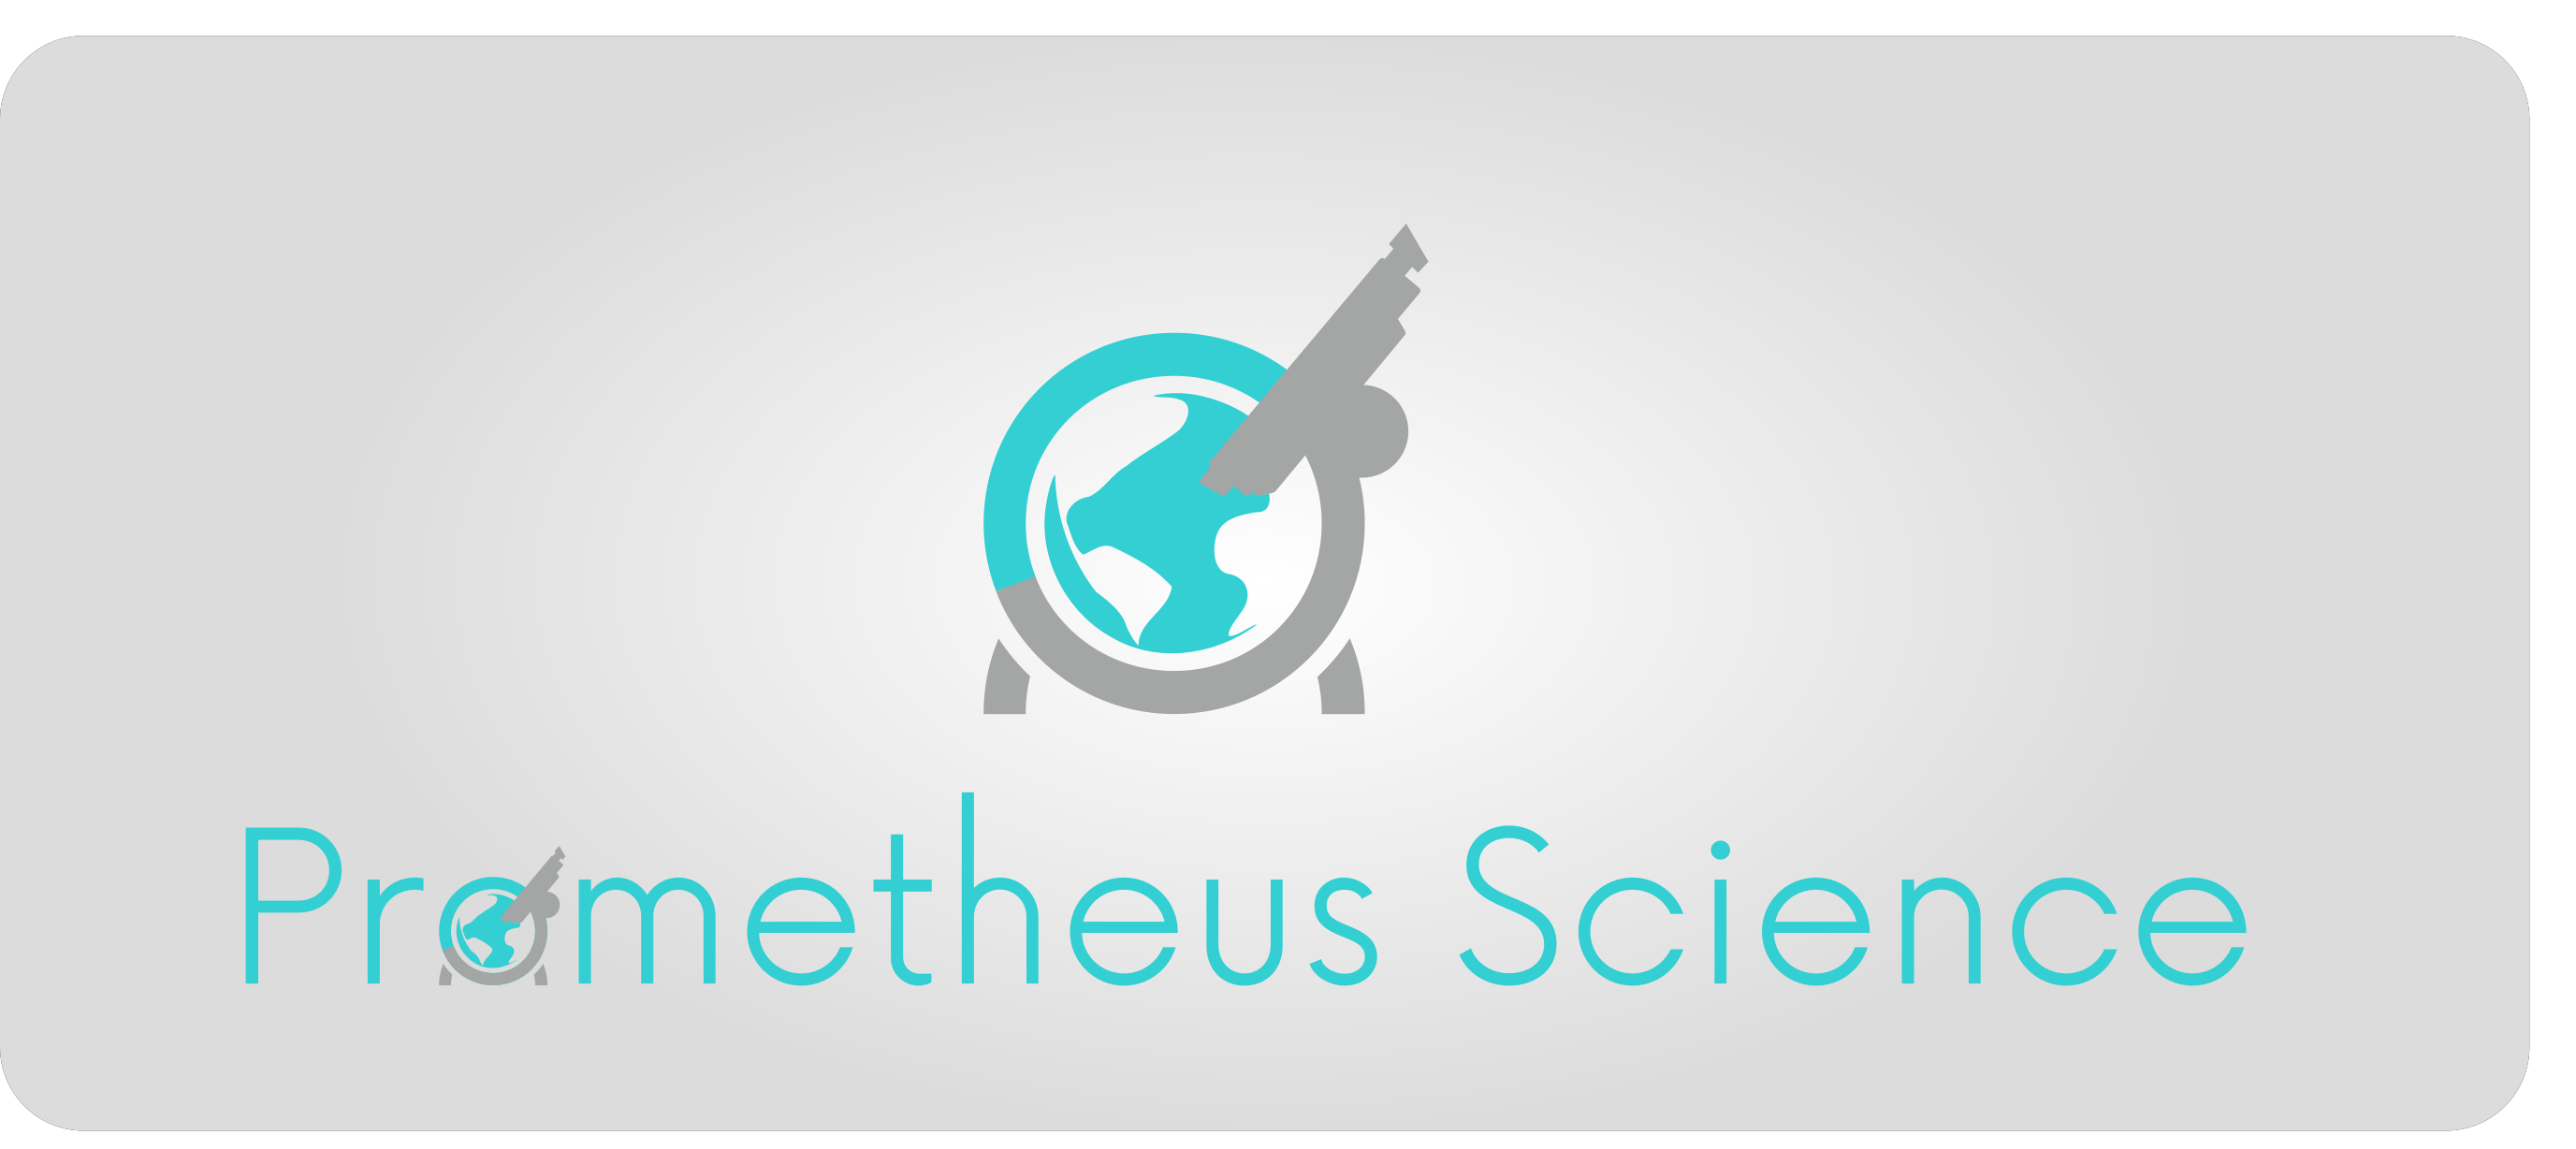 Group-Prometheus Science logo1.png